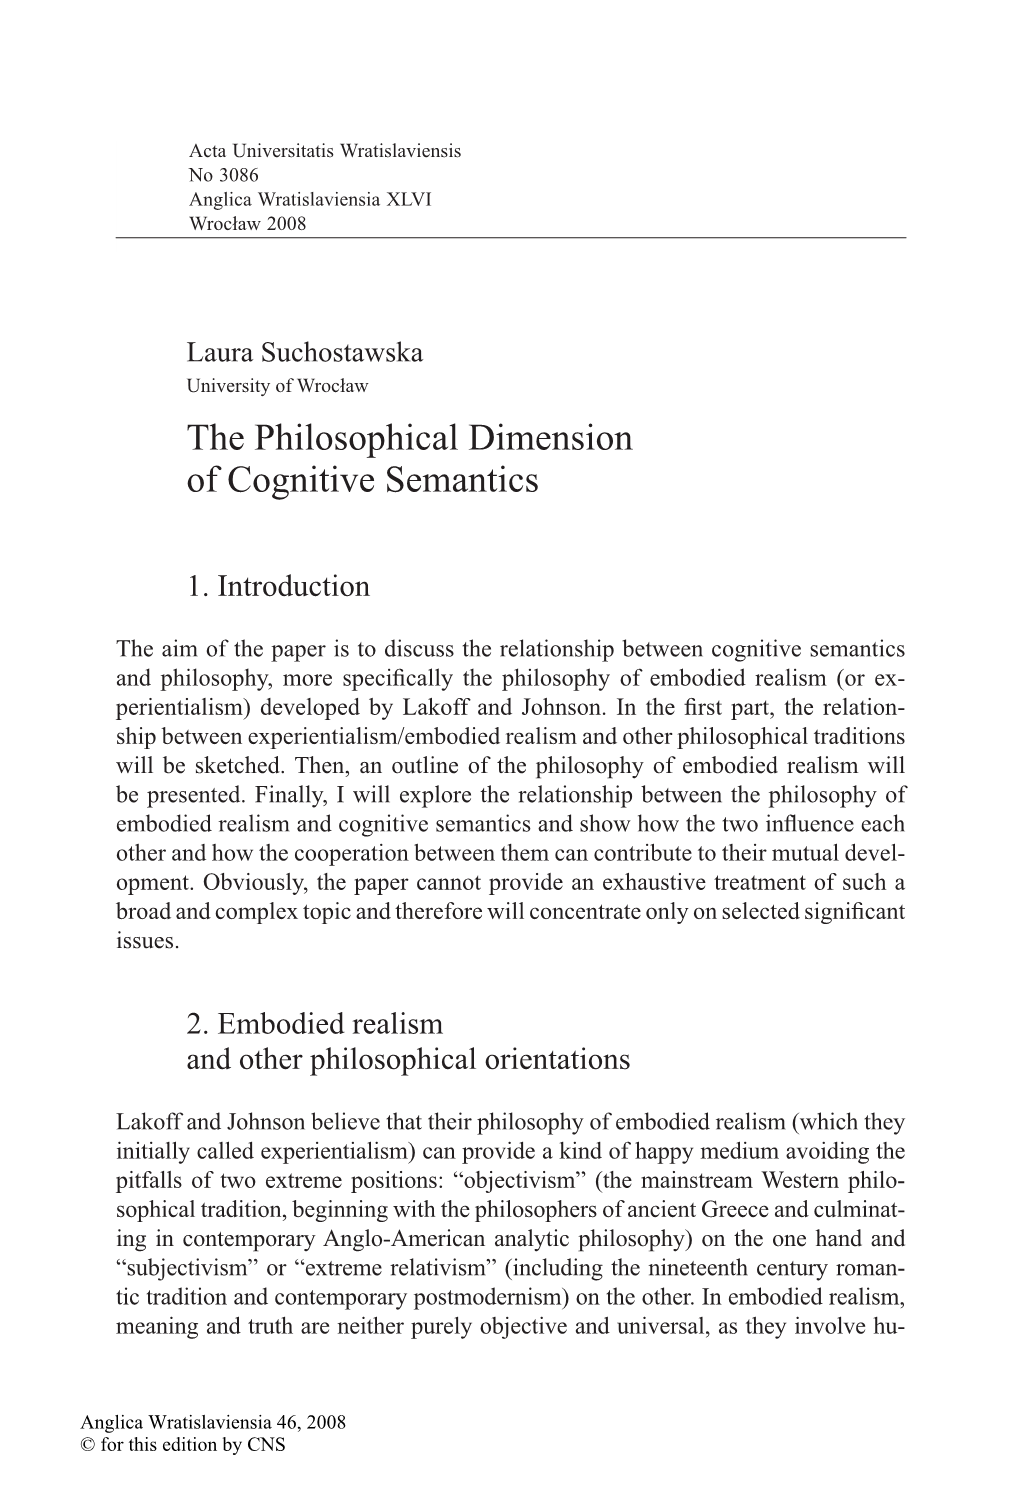 The Philosophical Dimension of Cognitive Semantics